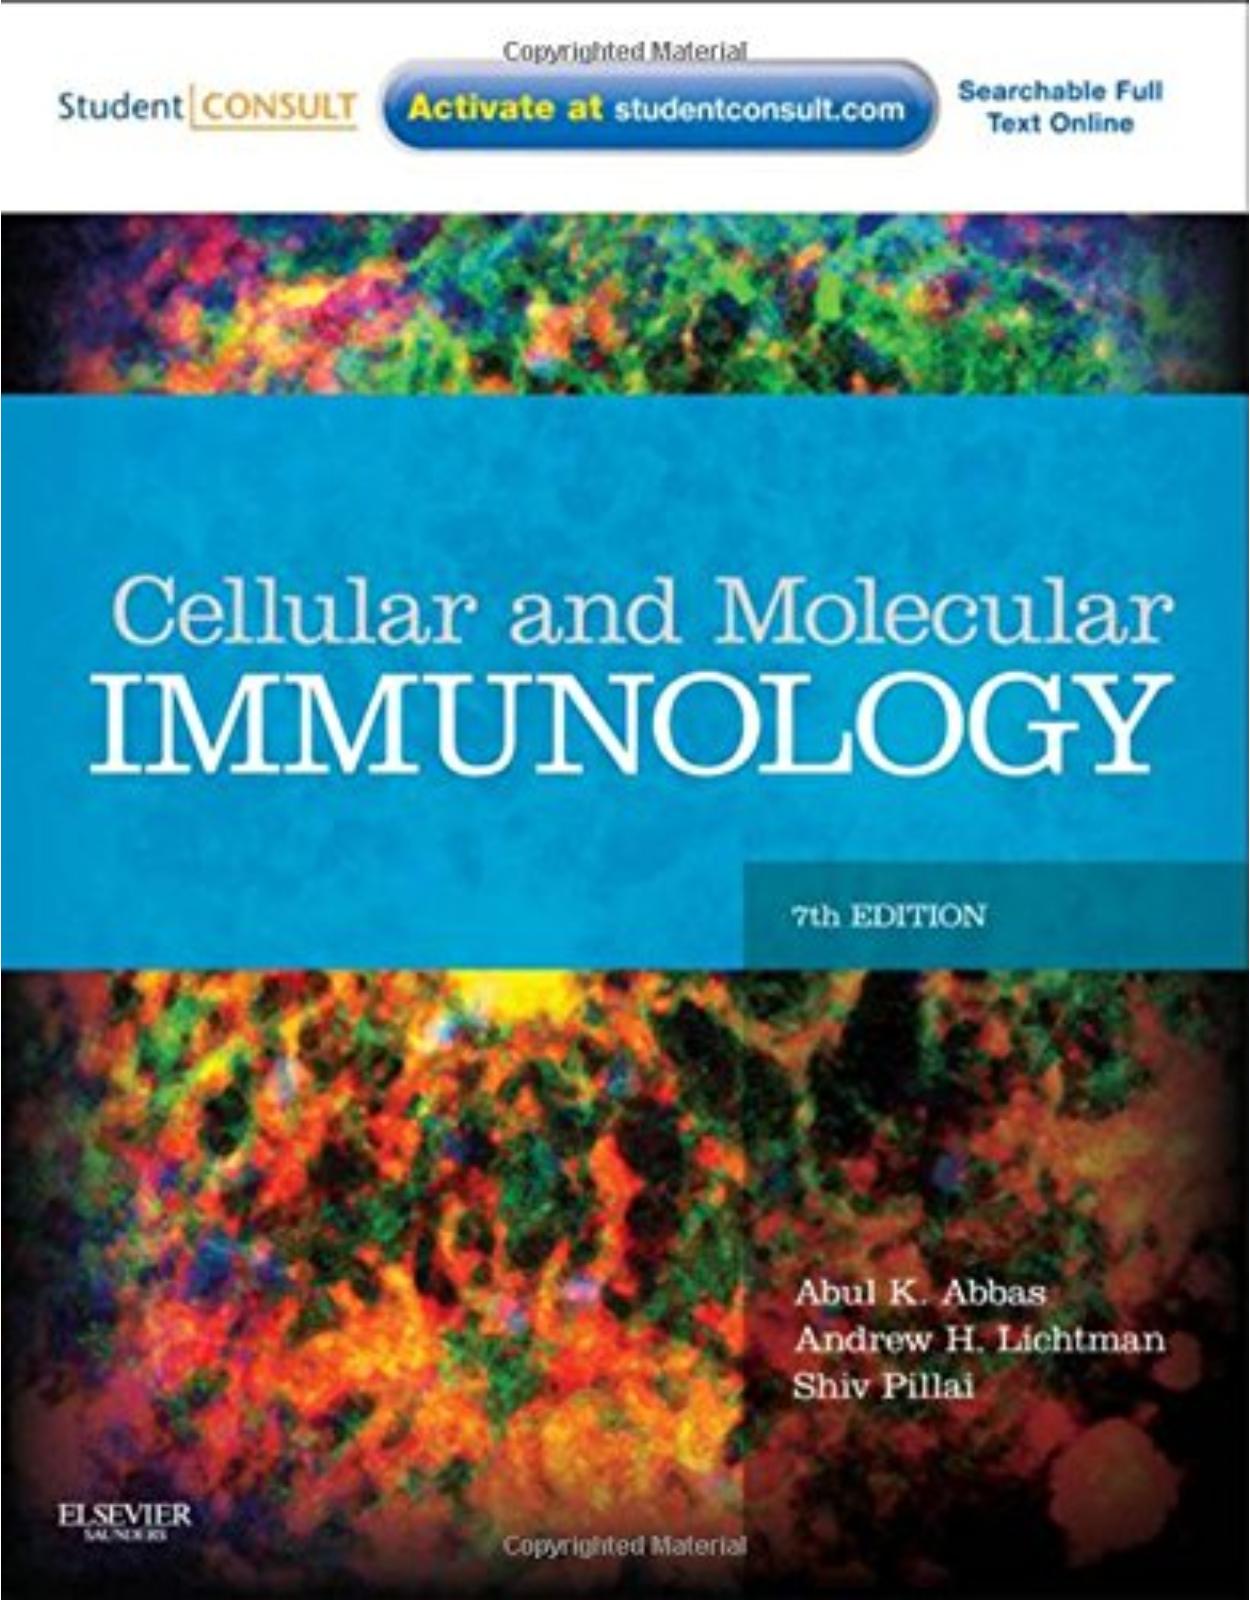 Cellular and Molecular Immunology, 7th Edition